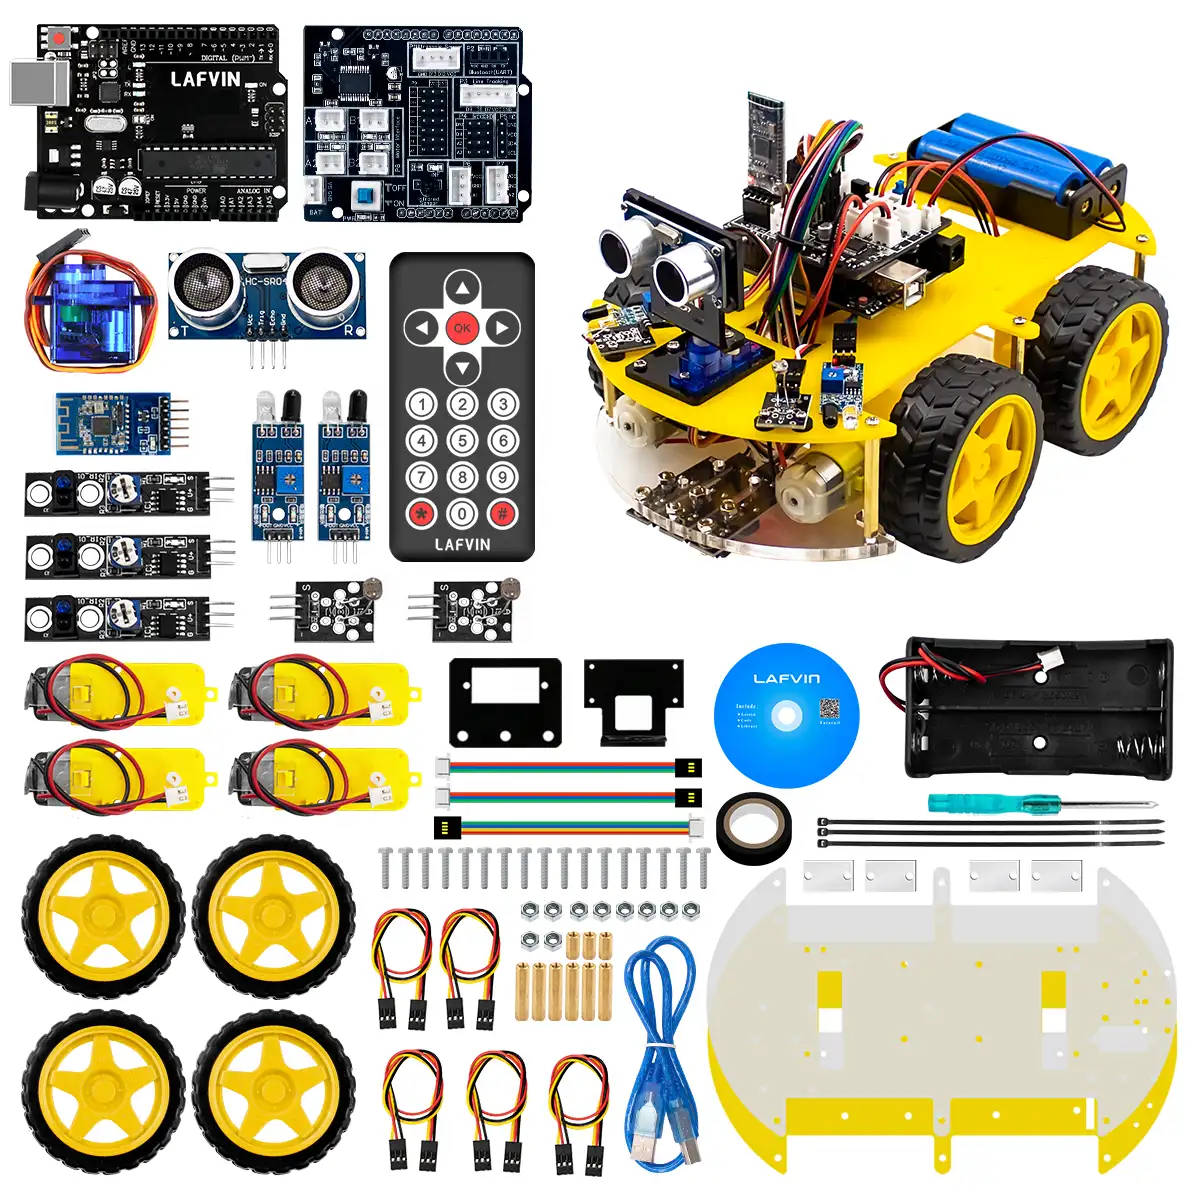 Lafvin 4wd multi robô carro kit atualizado, v2.0 para arduino robô haste/grafico programação carro robô